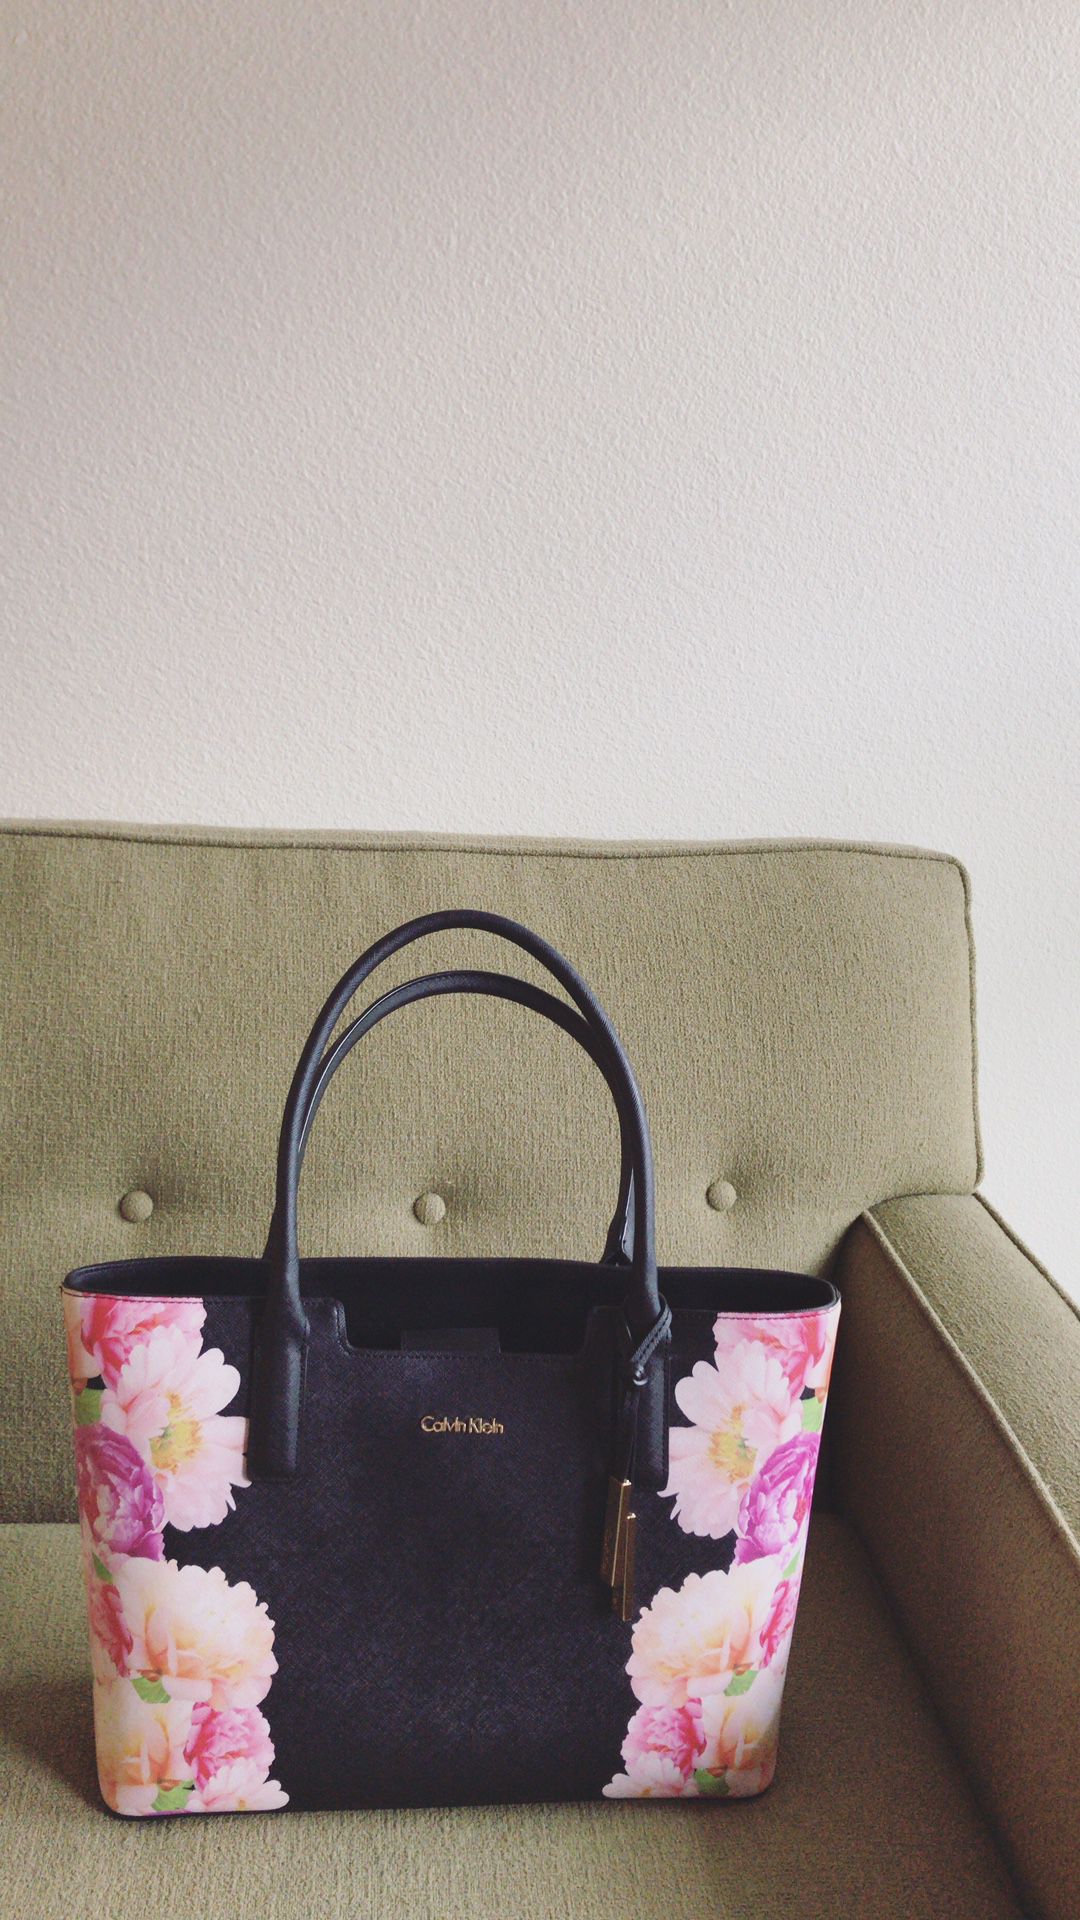 verwennen coupon Beangstigend Calvin Klein NWOT Black Saffiano Floral Tote Bag for Sale in San Jose, CA -  OfferUp